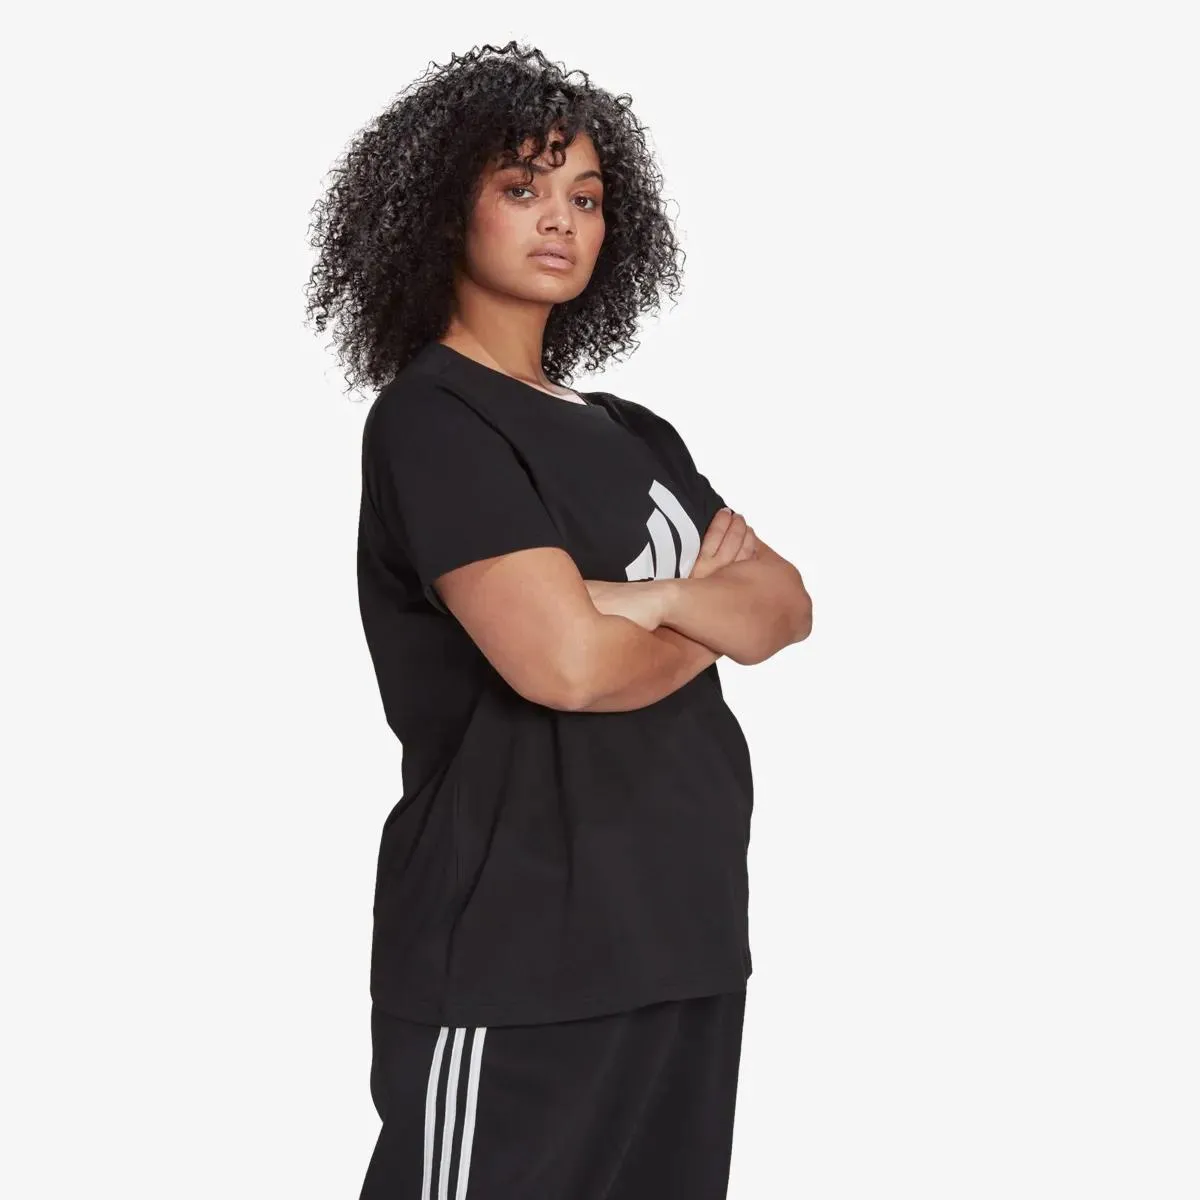 adidas T-shirt ESSENTIALS LOGO Plus Size 